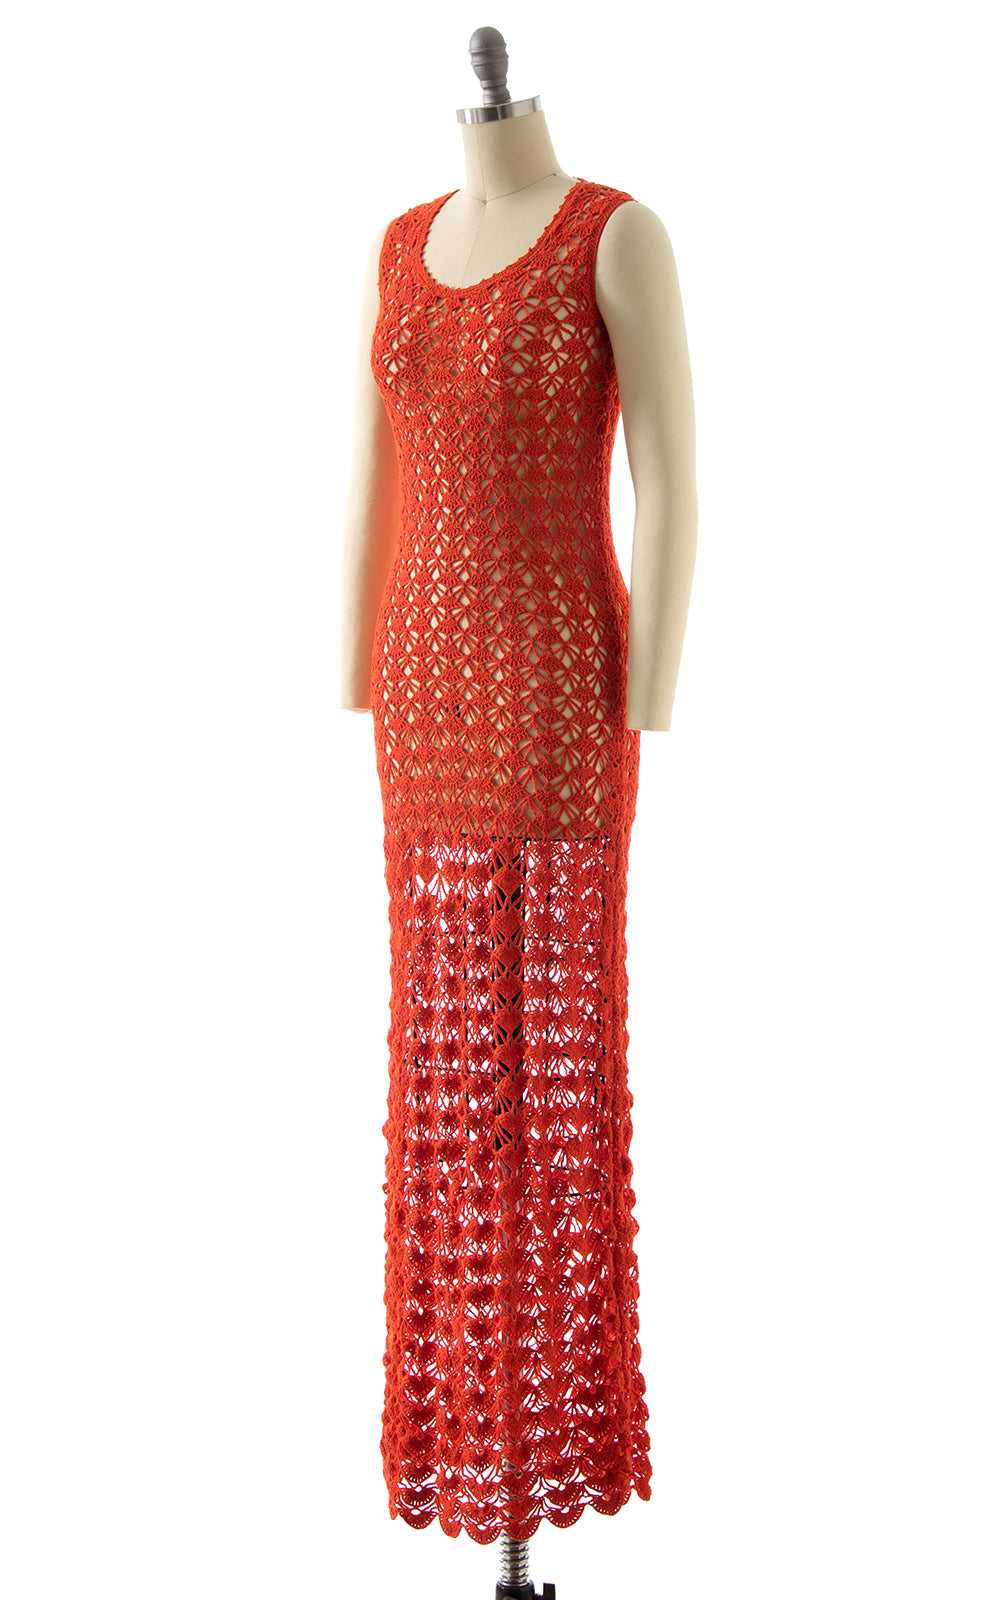 1970s Orange Crochet Maxi Dress | x-small/small - image 4